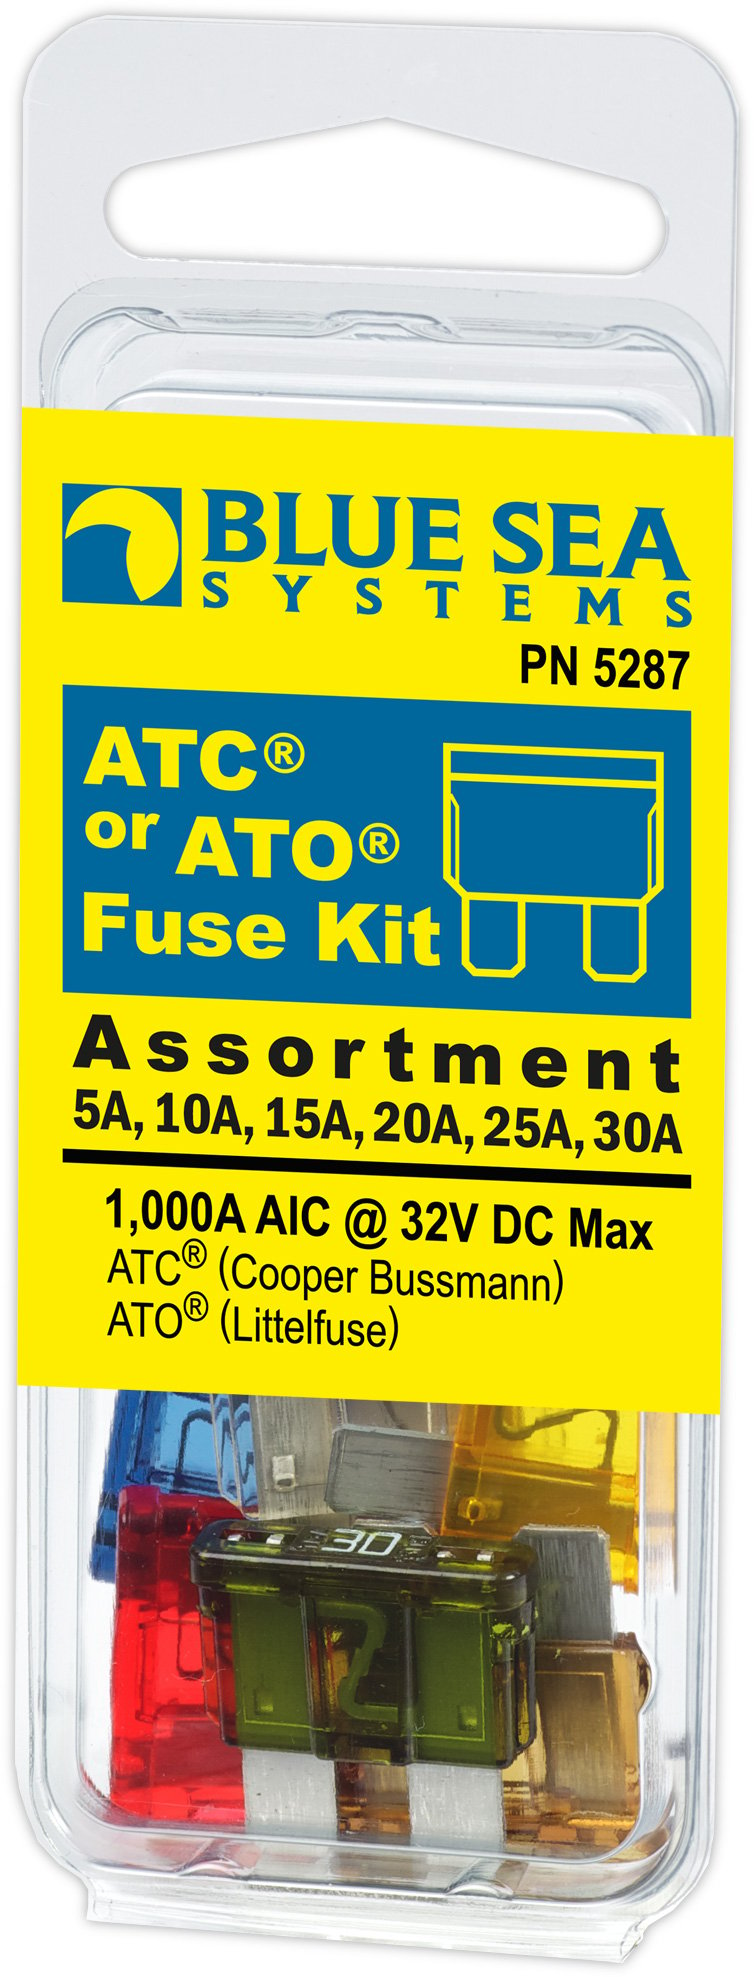 Is ATC fuse the same as ATO fuse?